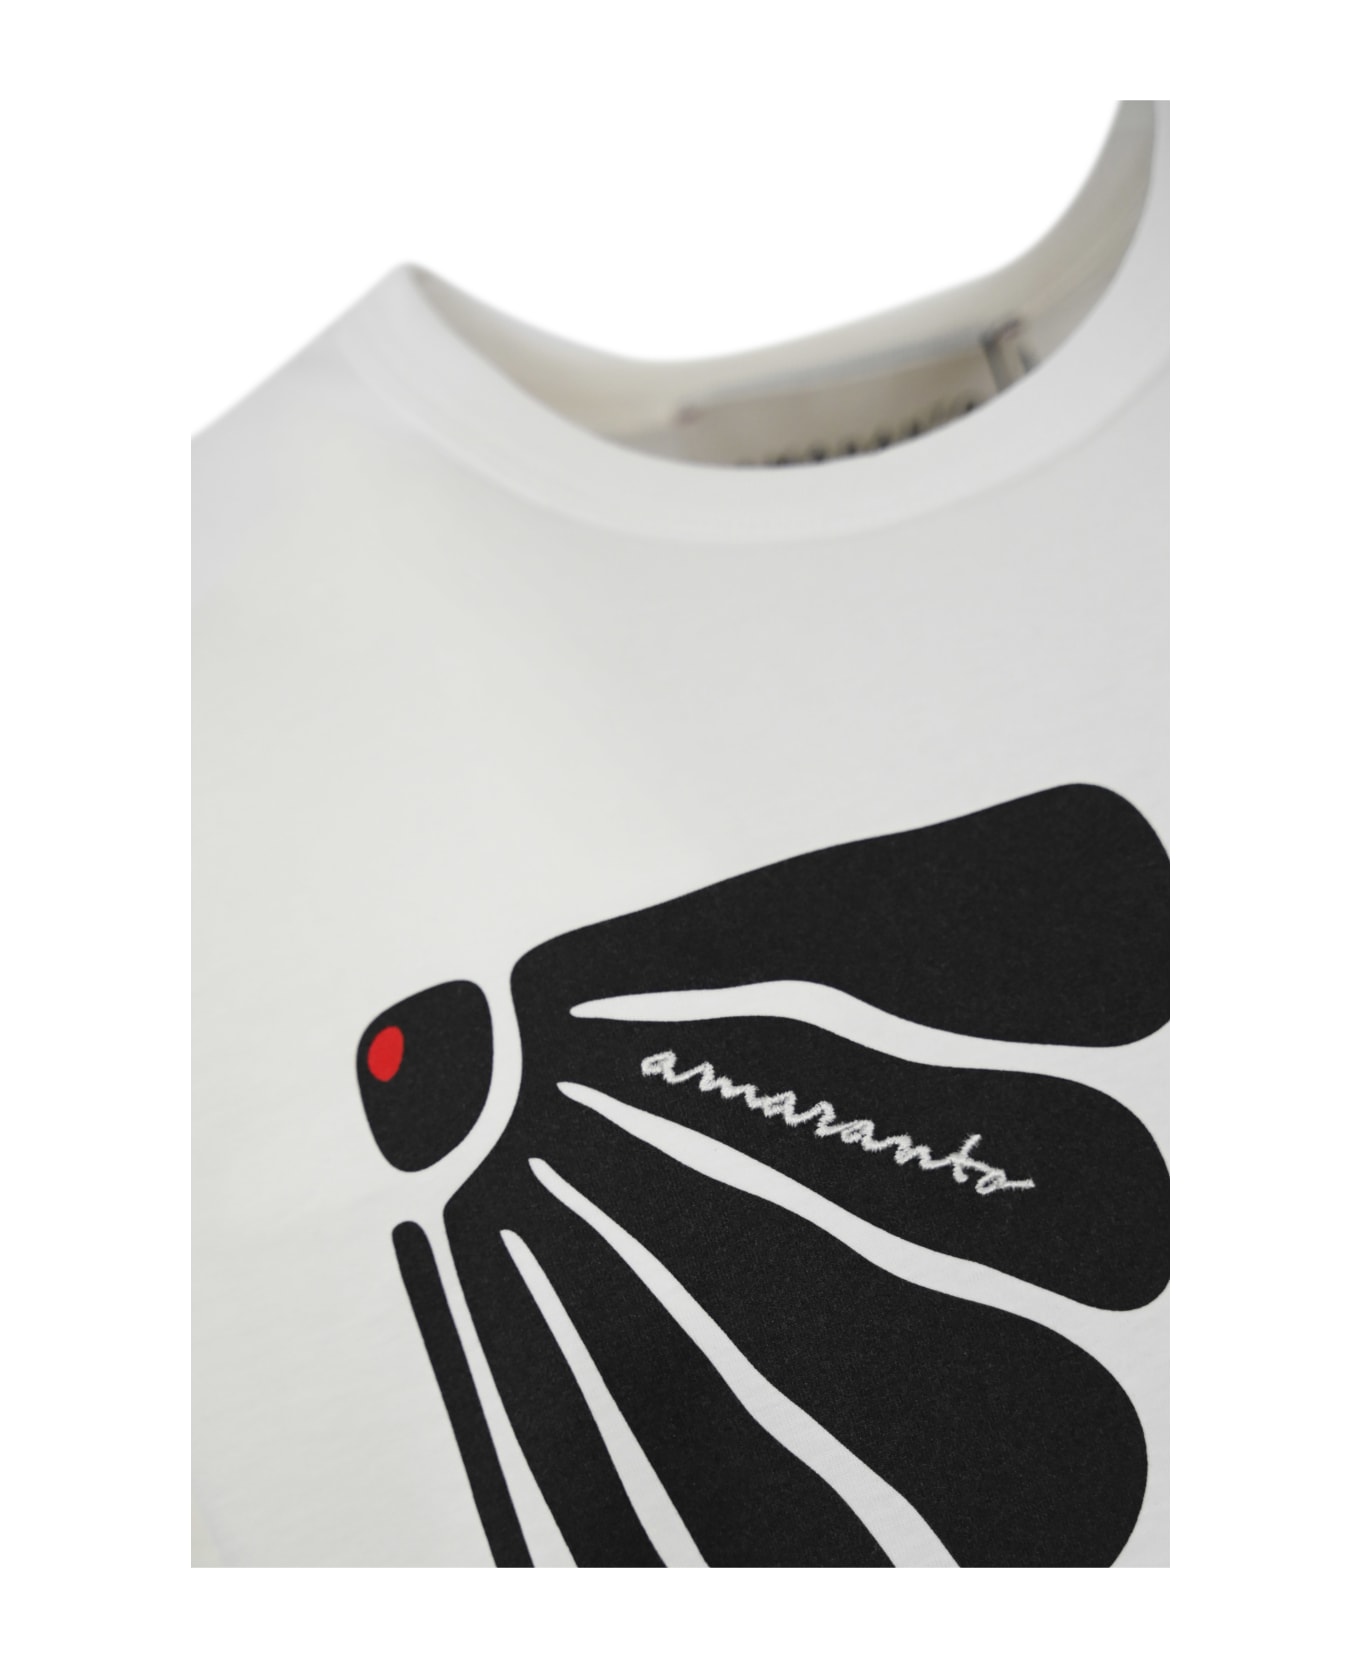 Amaranto T-shirt With Print - Panna